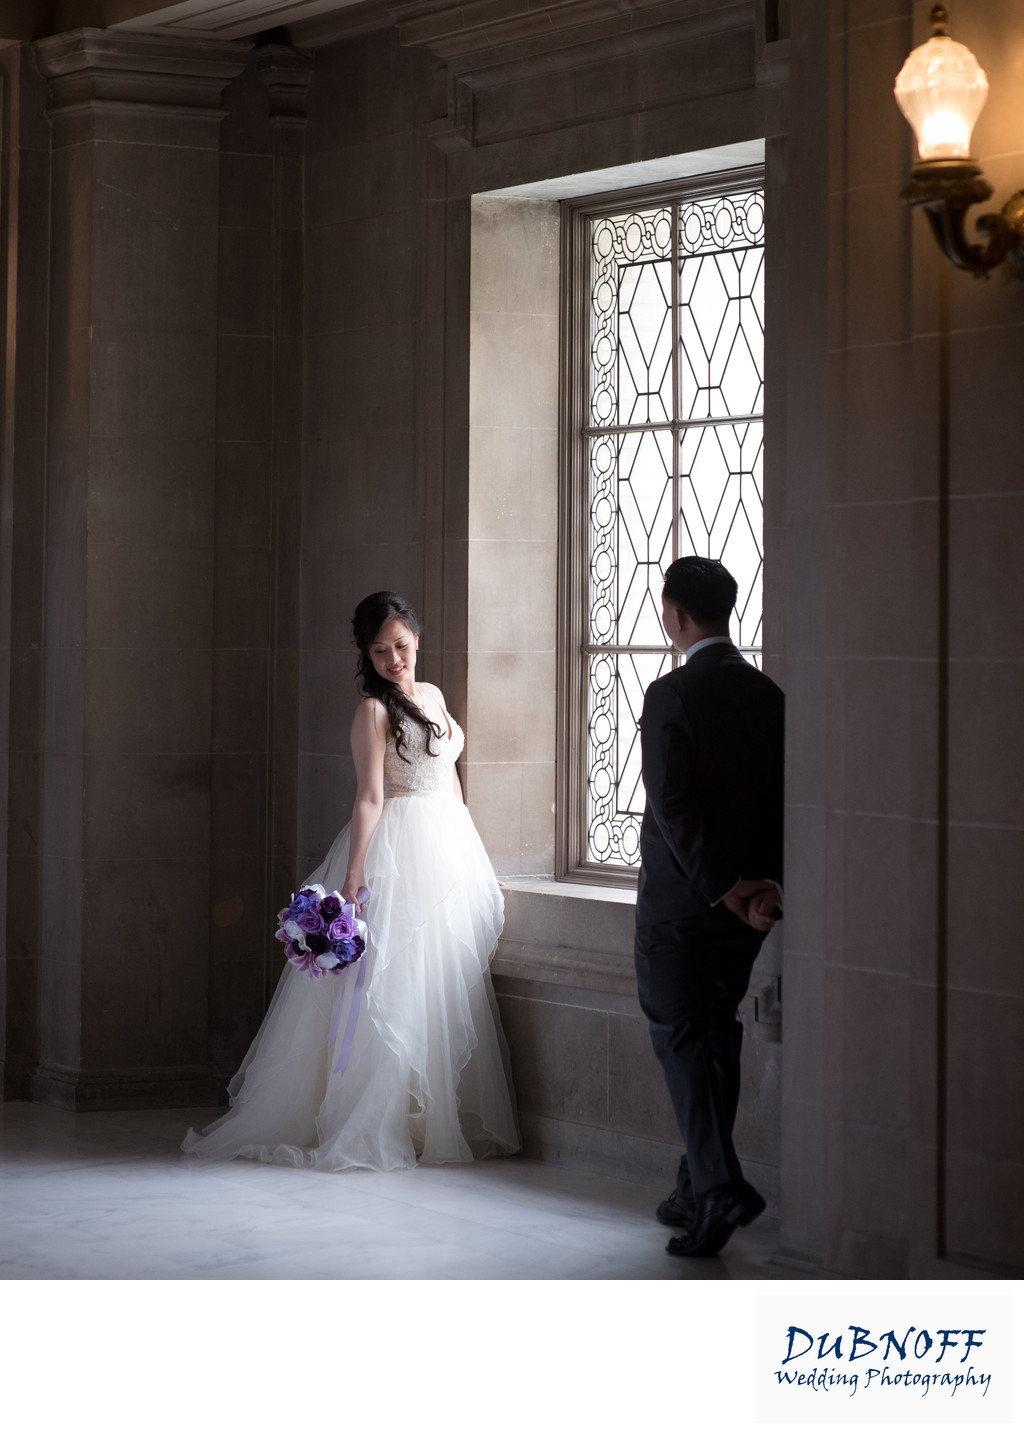 San Francisco City Hall Window Wedding Photography - Asian Couple